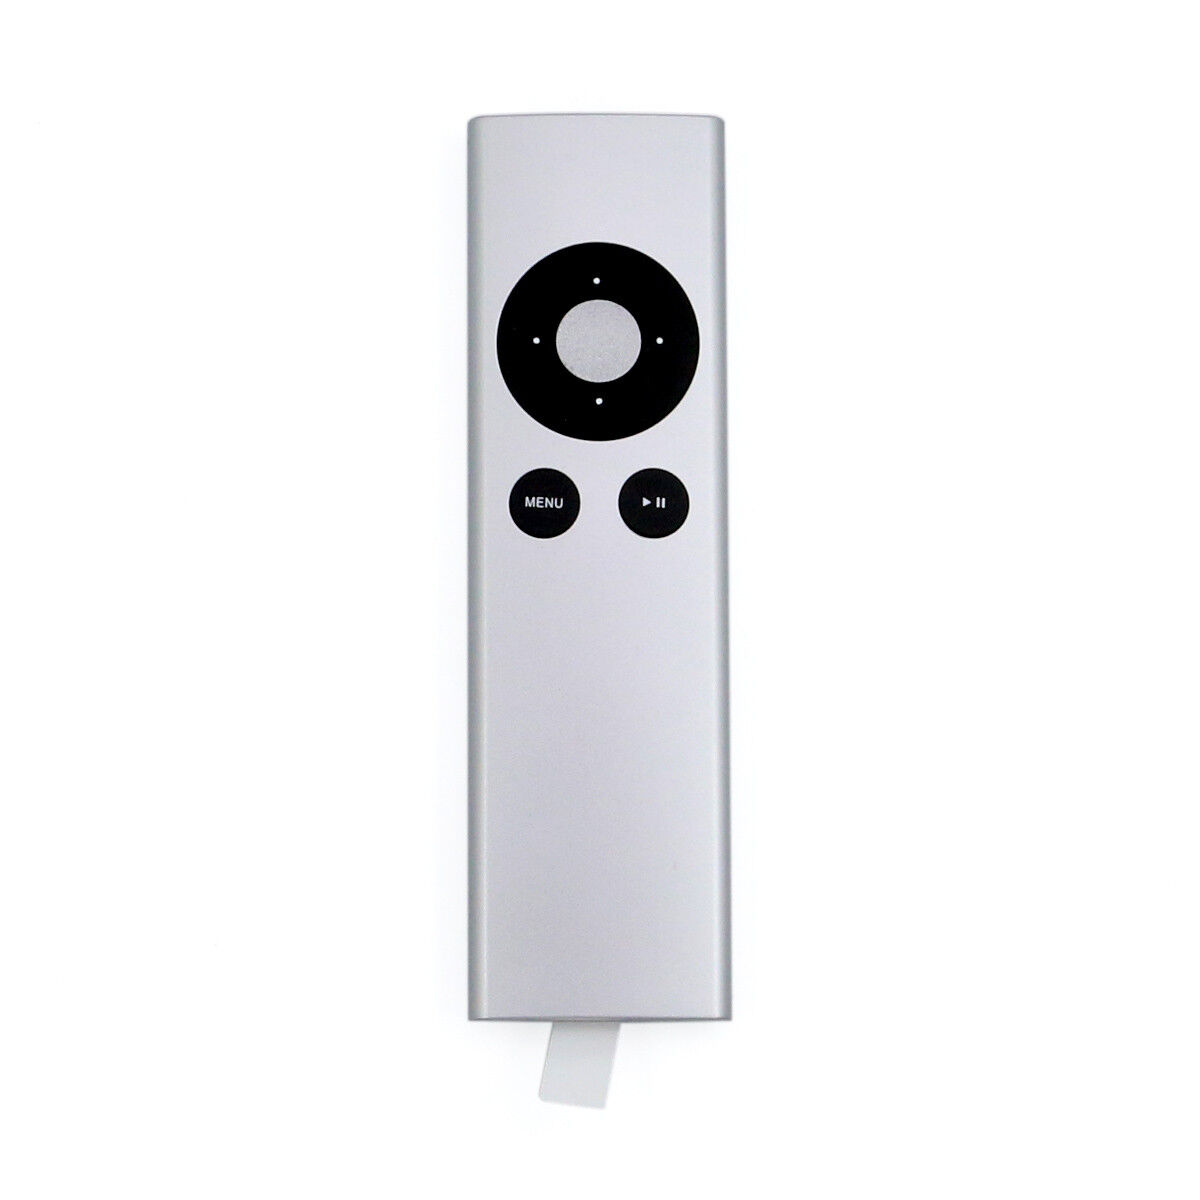 NEW Universal Remote Control MC377LL/A For Apple TV 2 3 Music System Mac mc377ll Unbranded white-apl - фотография #3